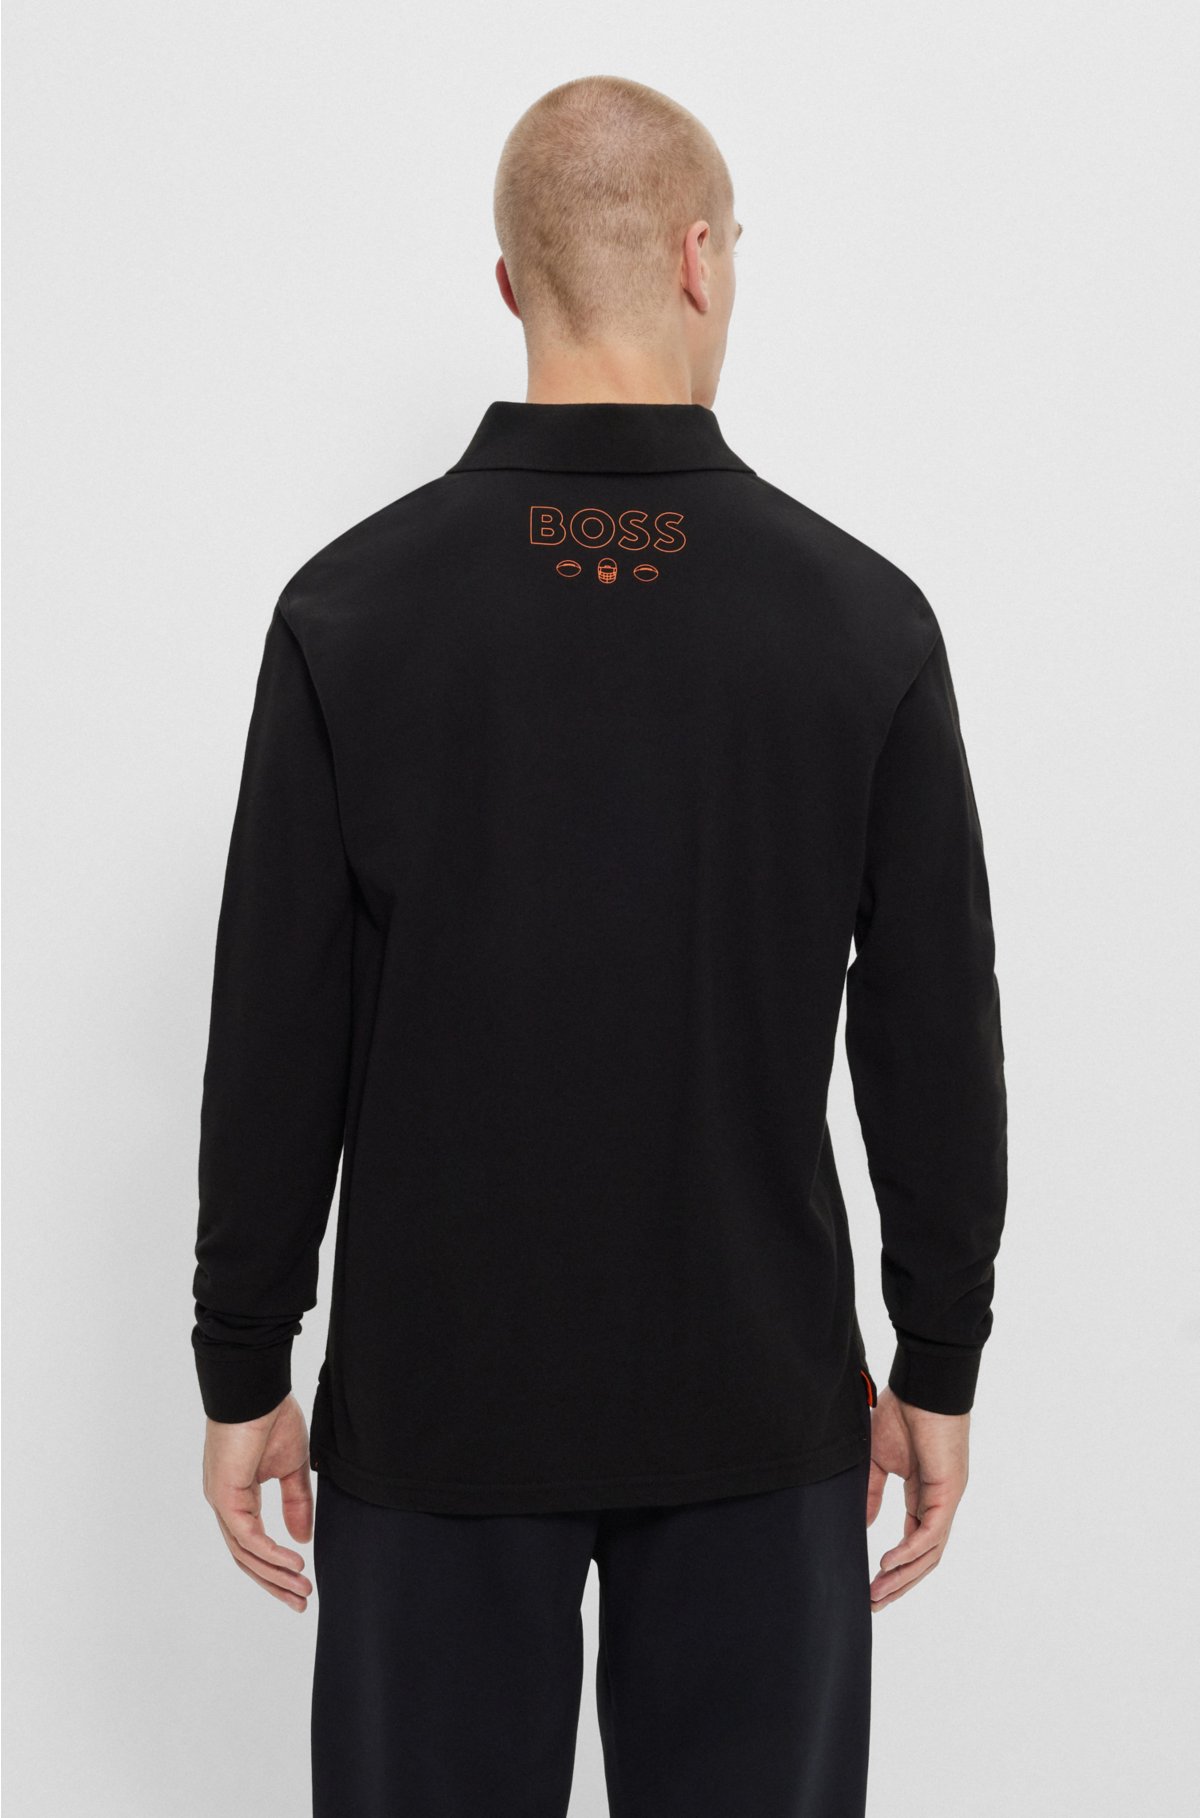 BOSS x NFL long-sleeved polo shirt with collaborative branding, Bears